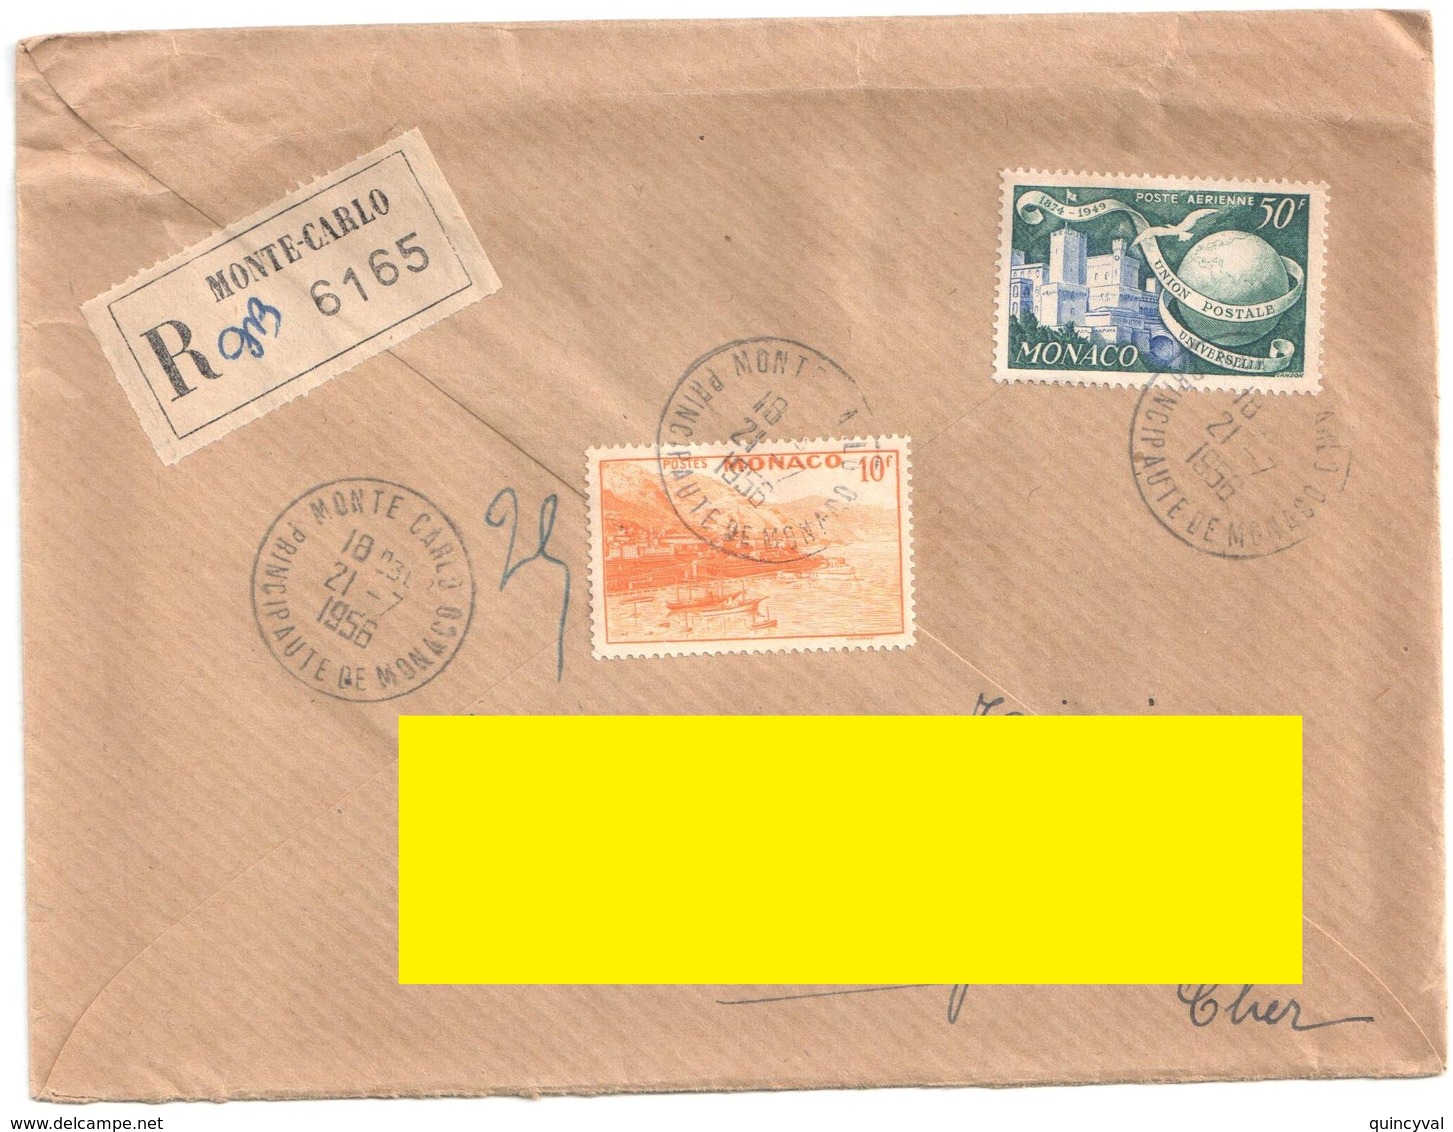 MONTE CARLO Lettre Recommandée Ob 21 7 1956 10 F Rade Jaune 50 FUPU Yv 311A PA47 - Covers & Documents